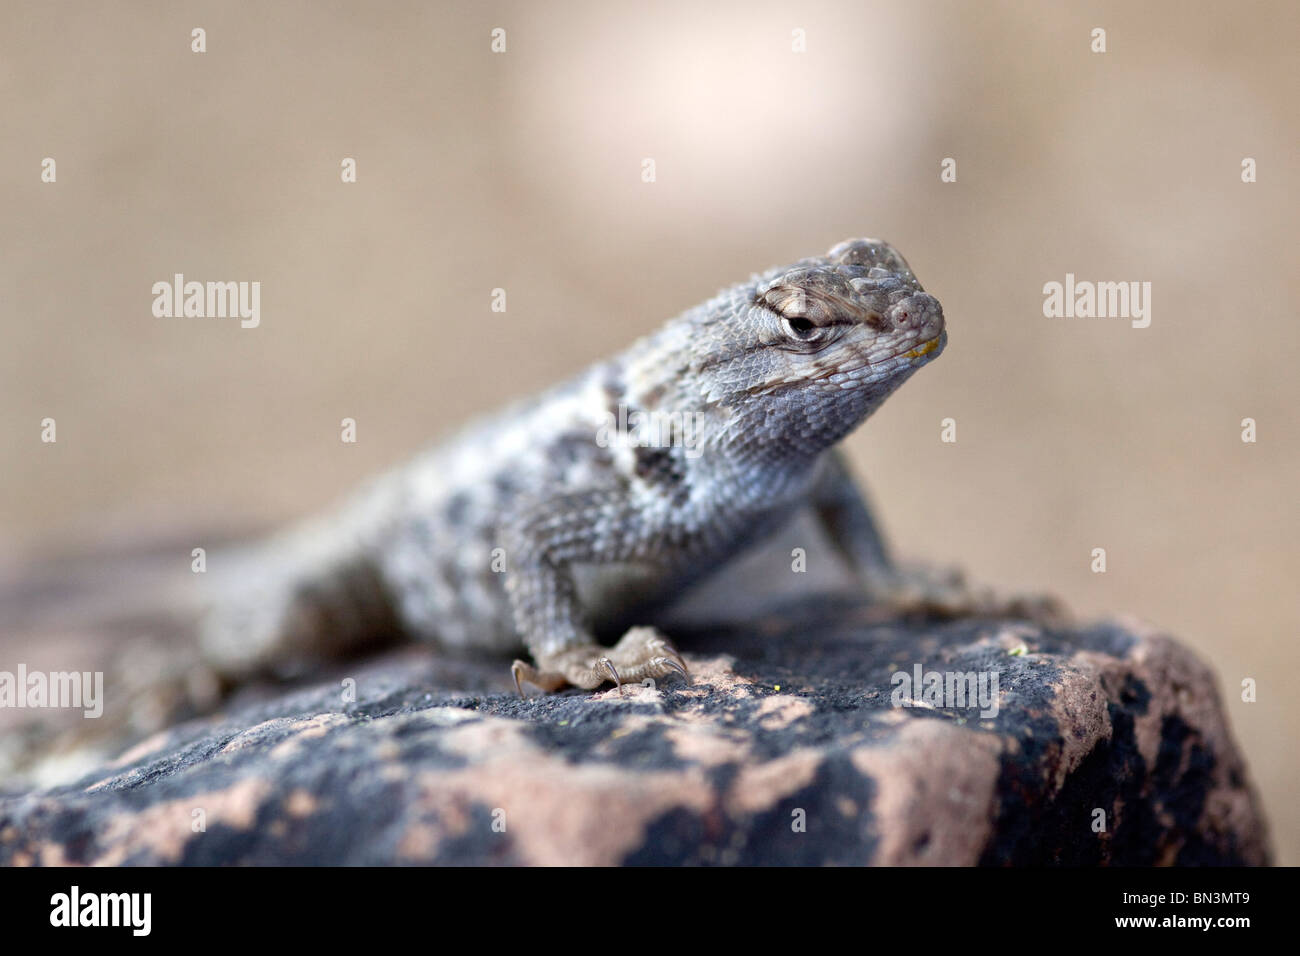 Lizard sitting on a stone, Desert Botanical Garden, Phoenix, Arizona, USA, close-up Stock Photo